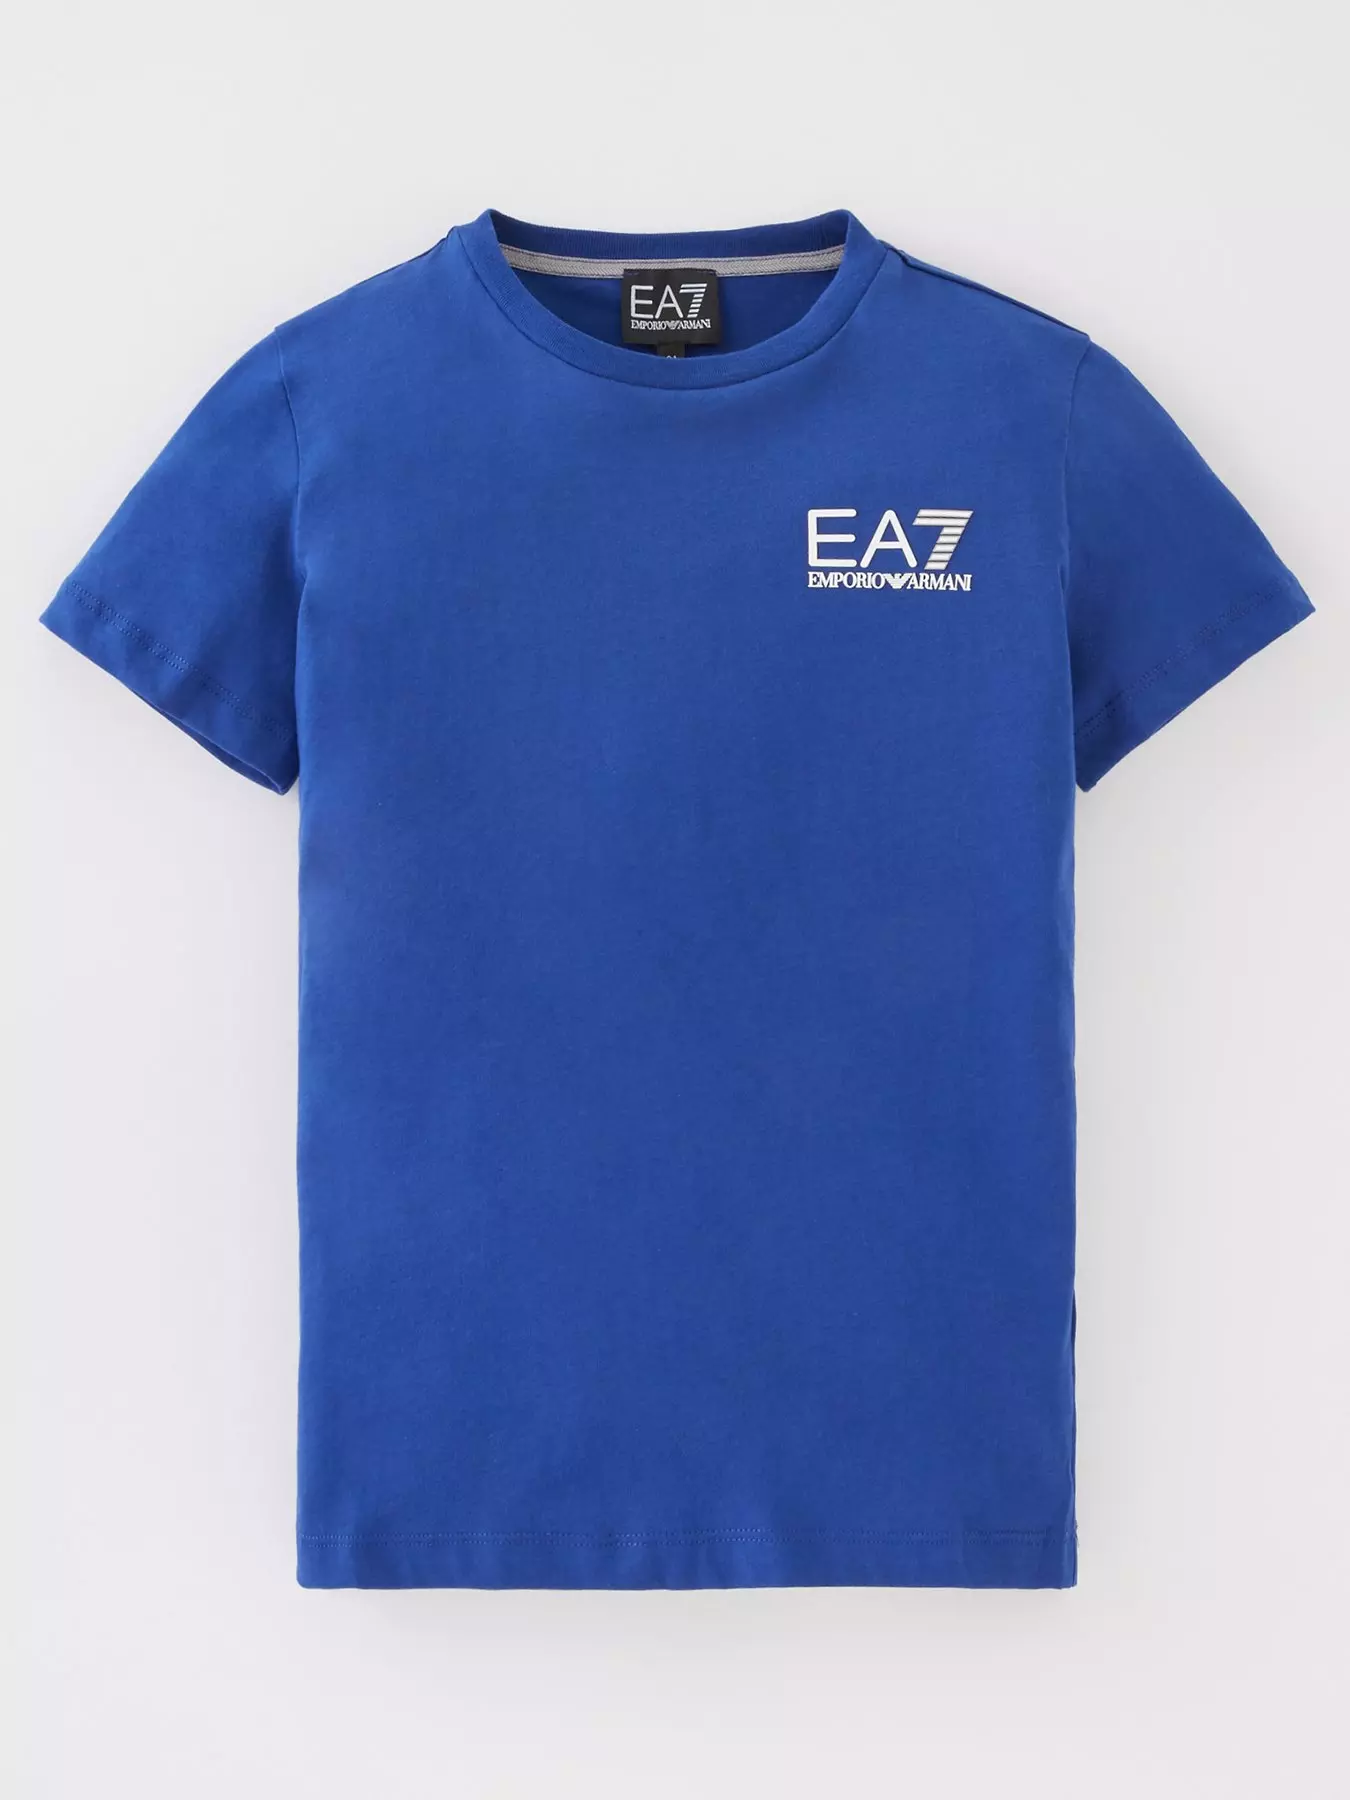 Ea7 emporio armani Boys clothes | Child & |